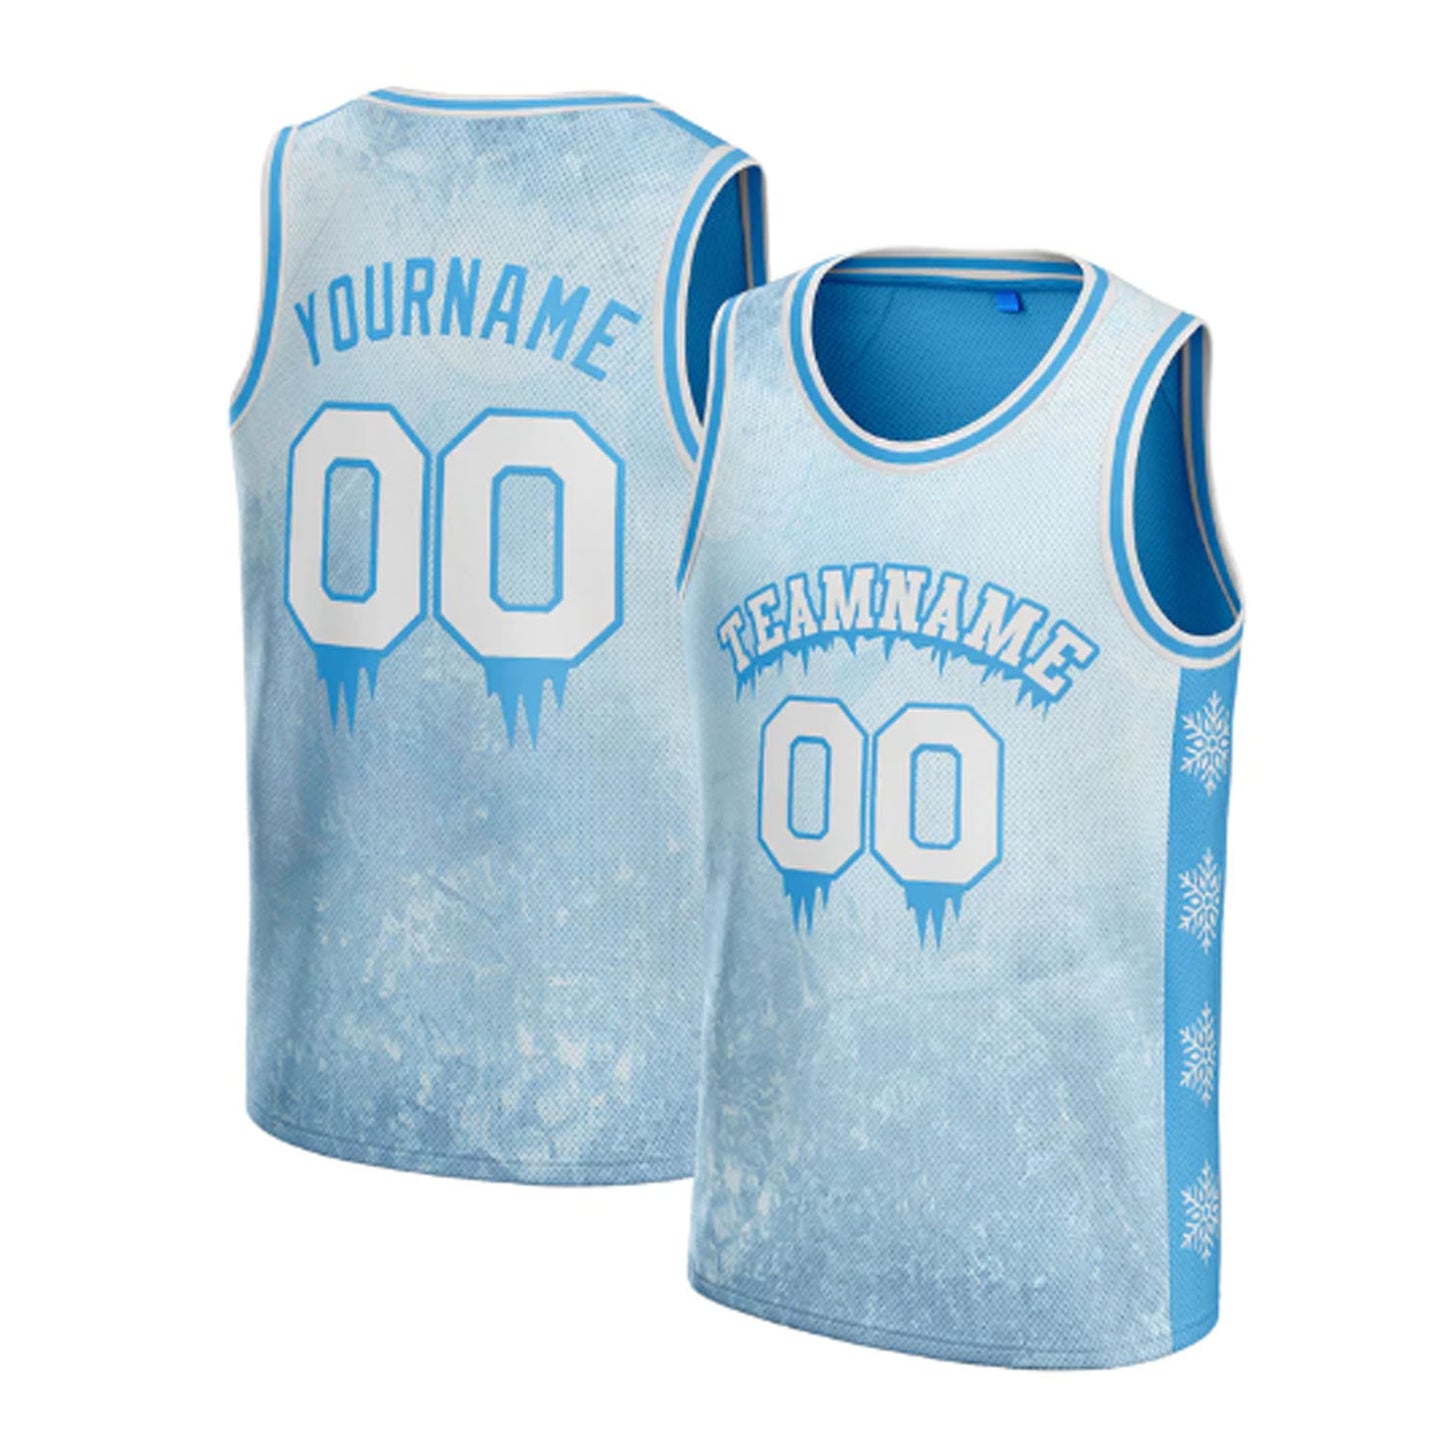 Icy Blue Custom Basketball Jersey